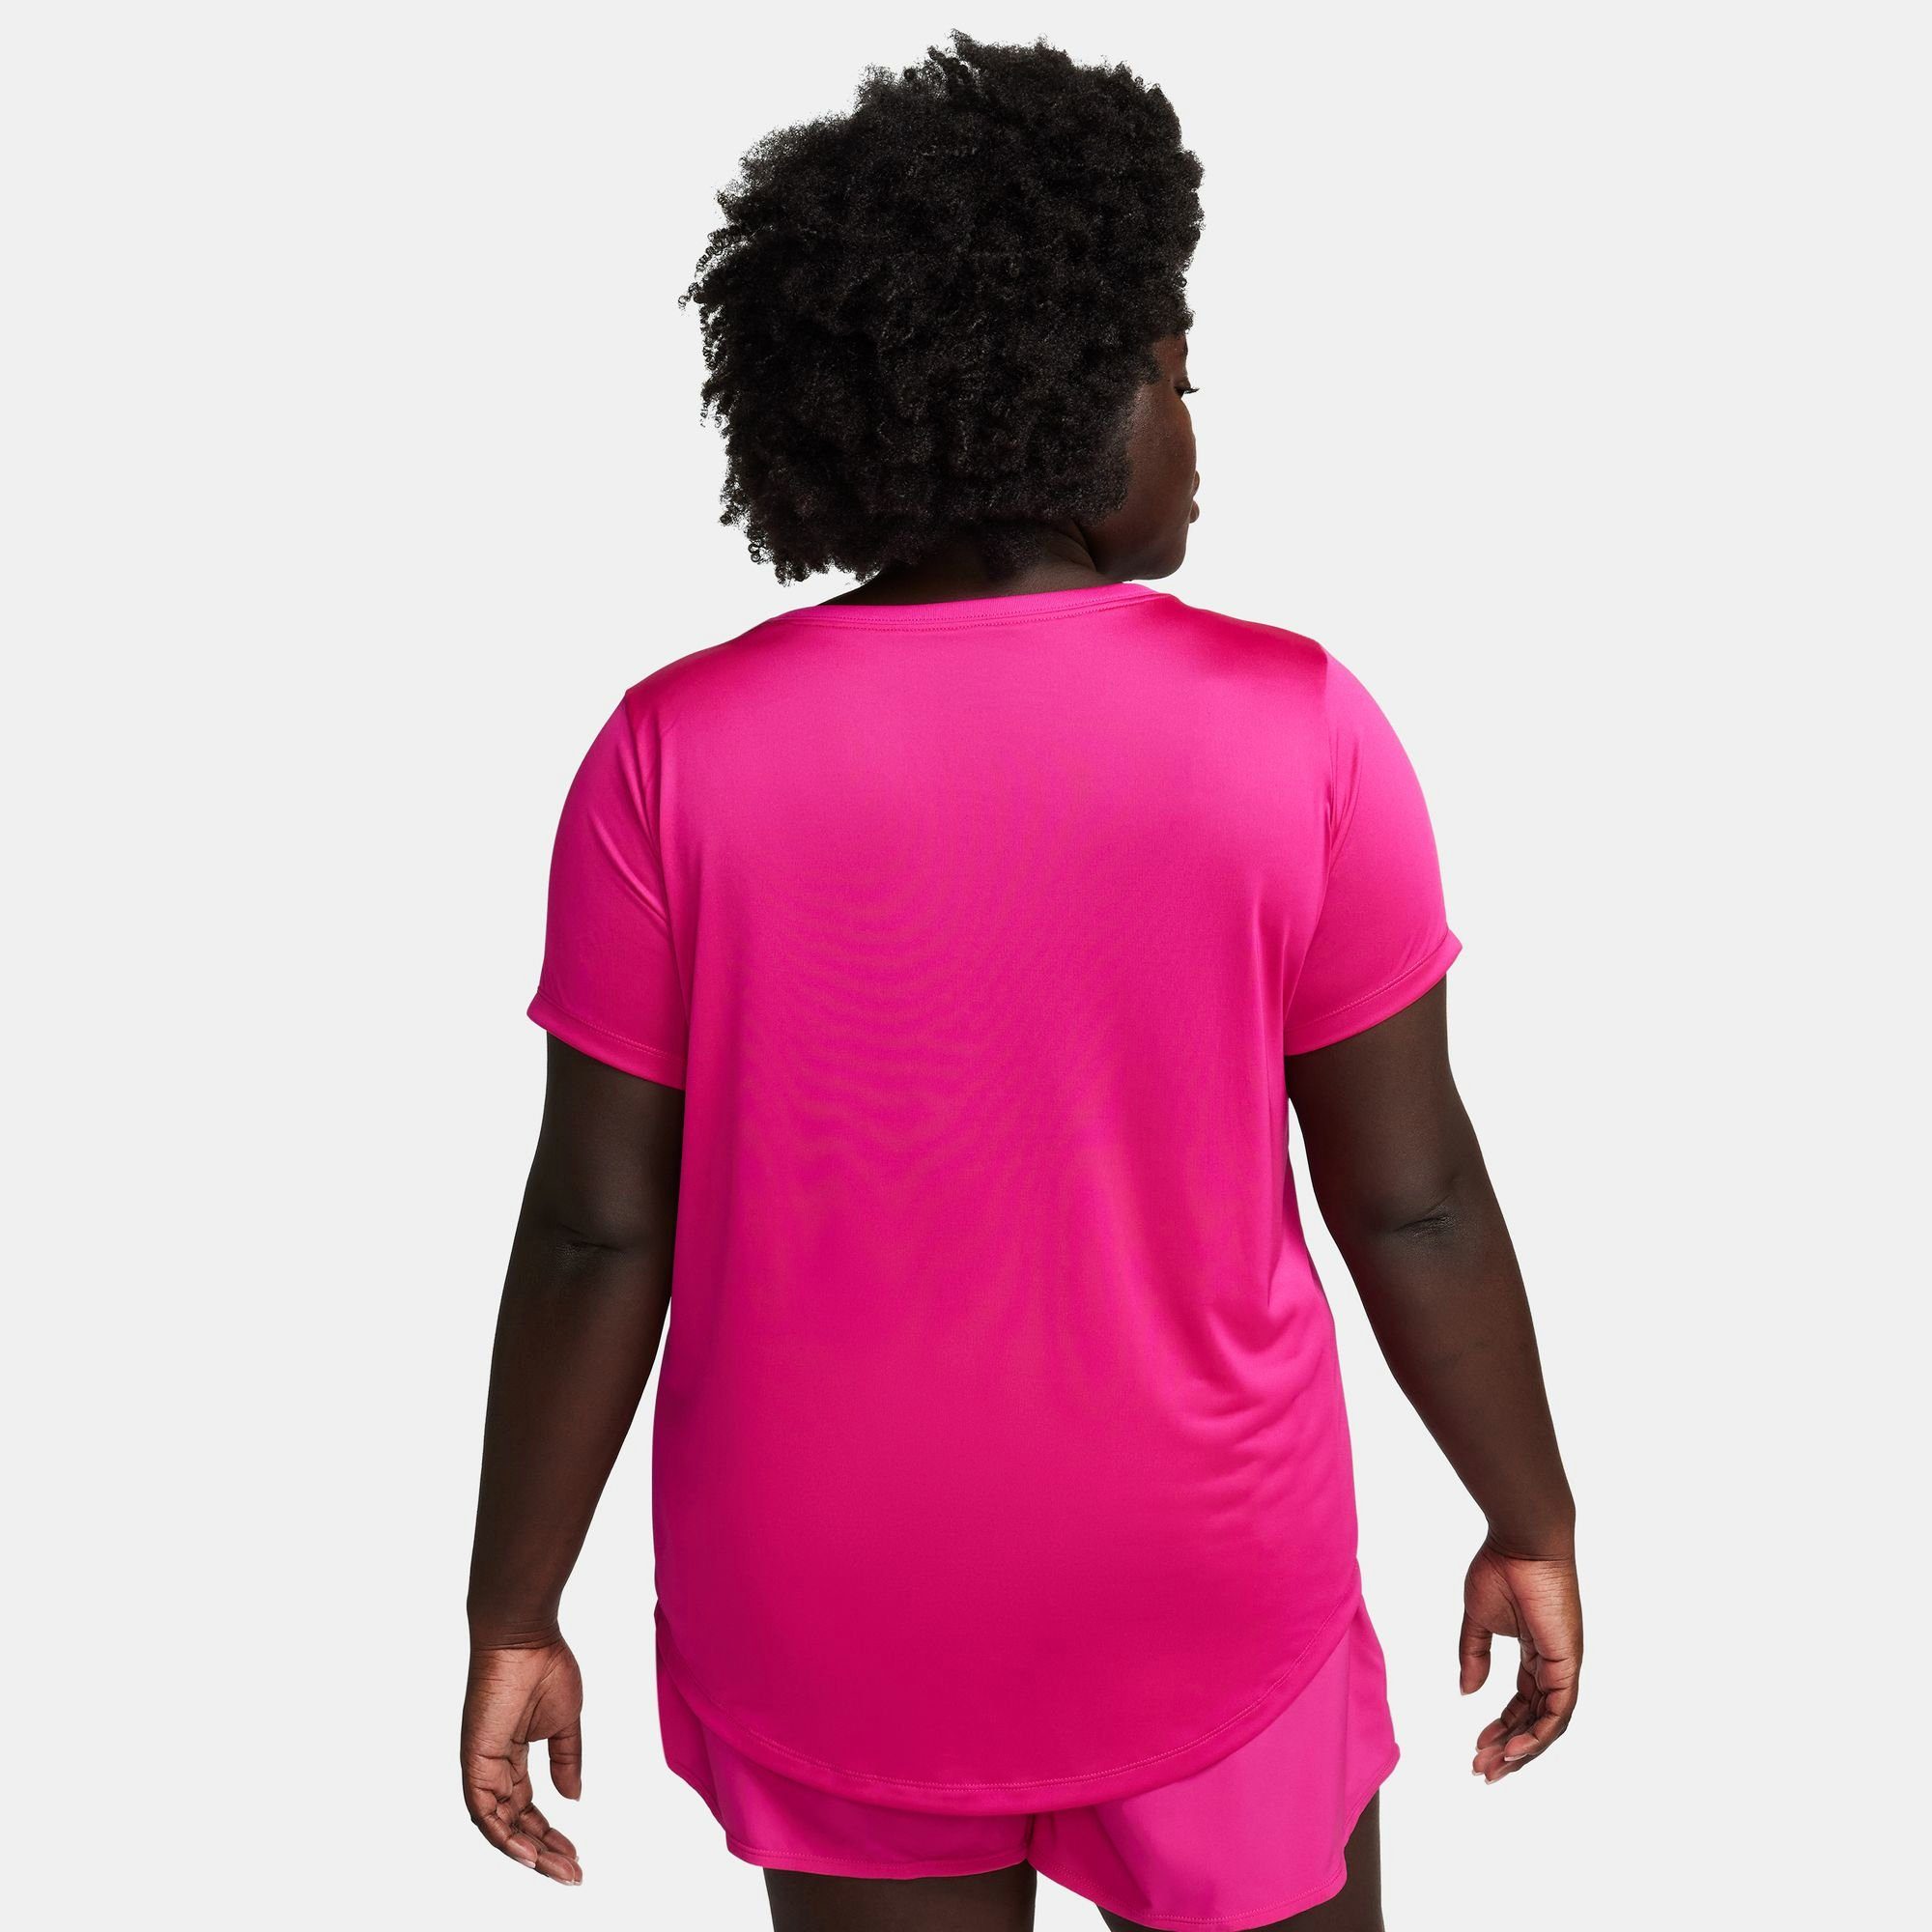 FIREBERRY/WHITE (PLUS DRI-FIT SIZE) Nike Trainingsshirt WOMEN'S T-SHIRT